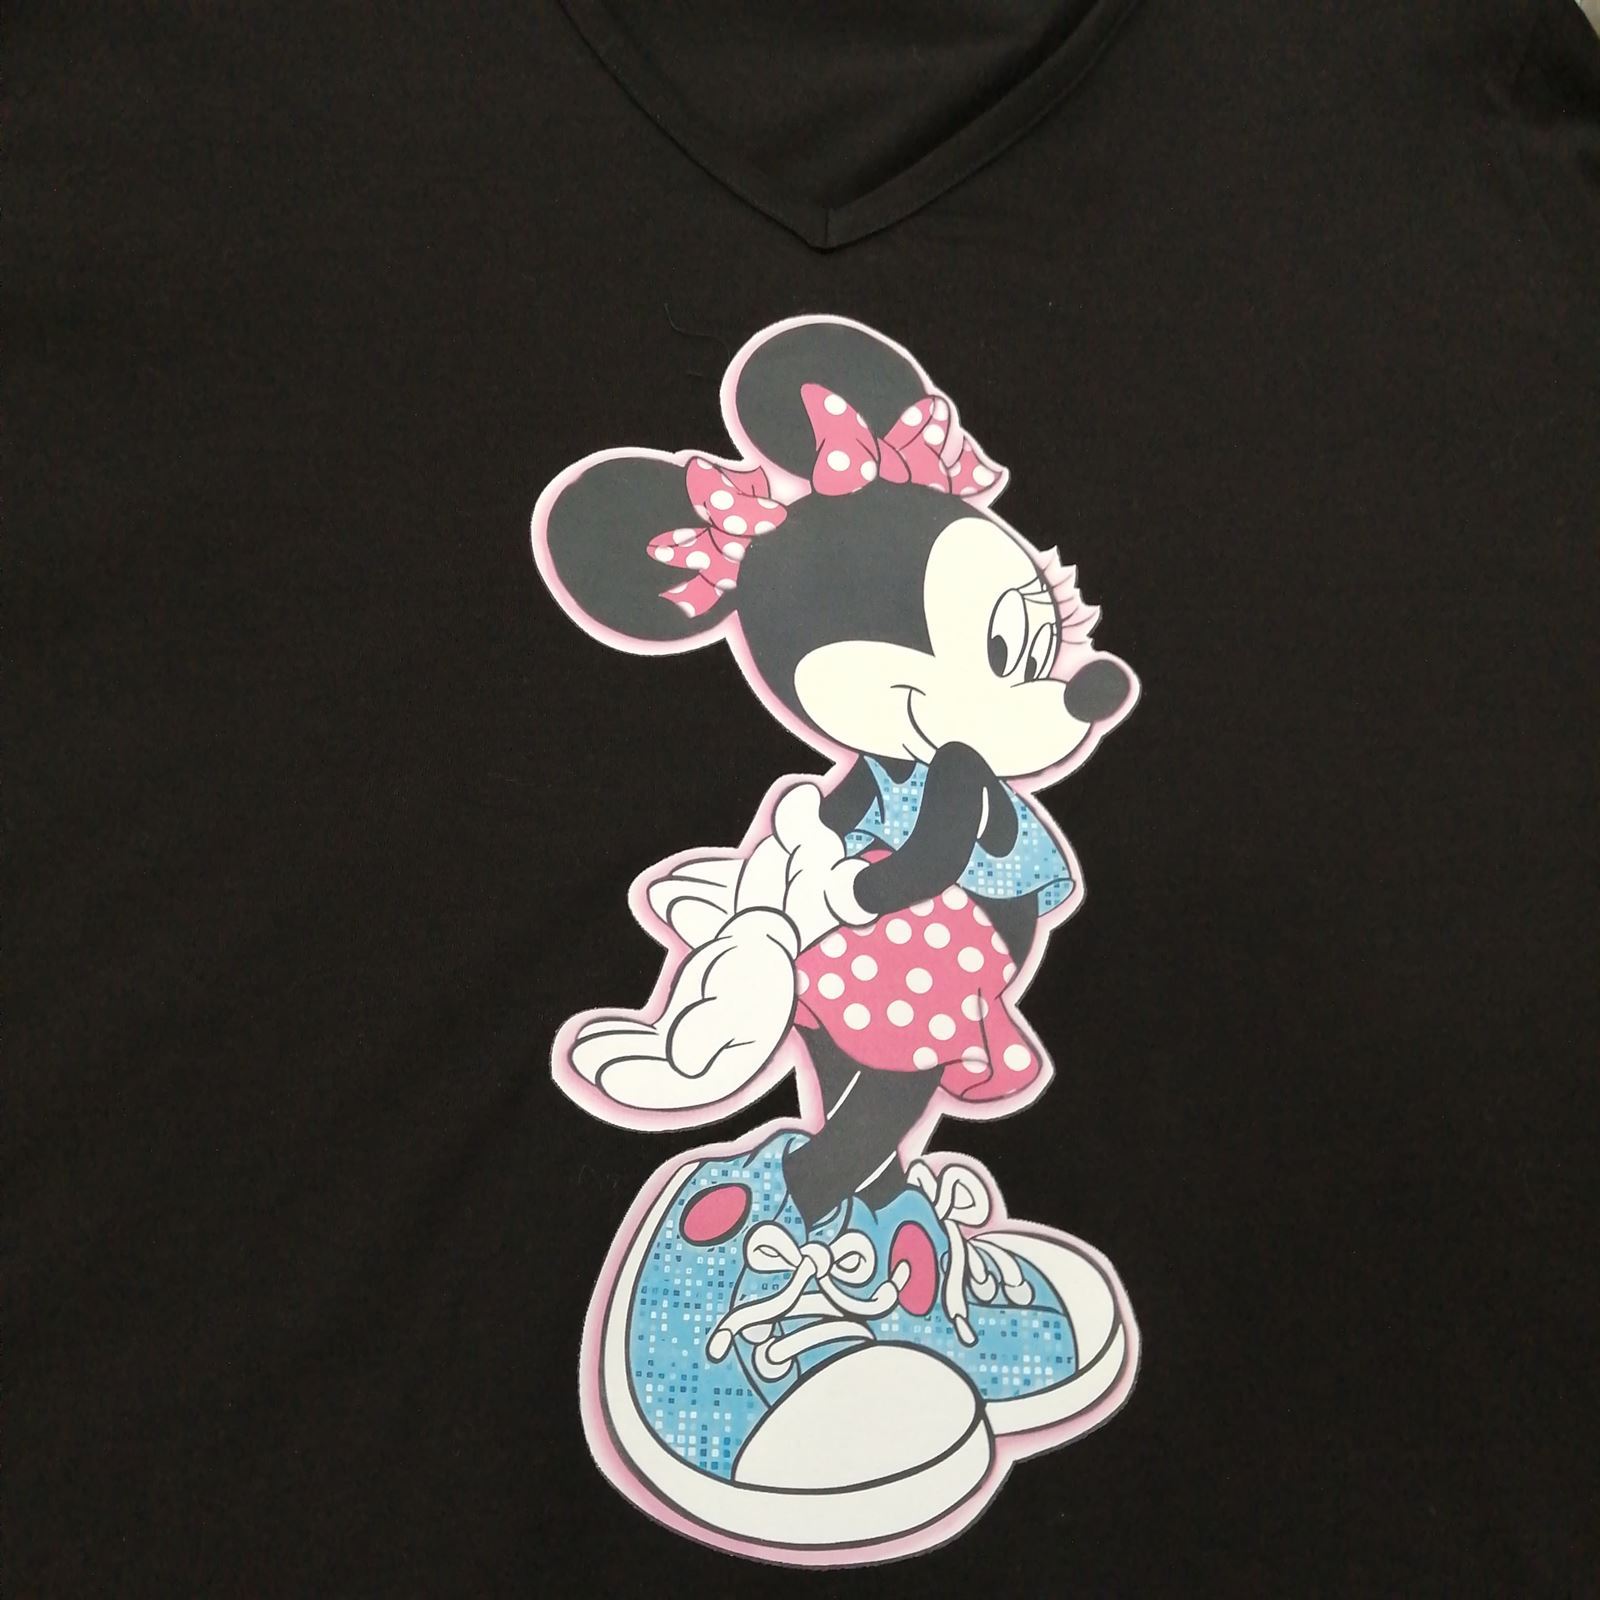 Camiseta Minnie moda curvy - Imagen 2